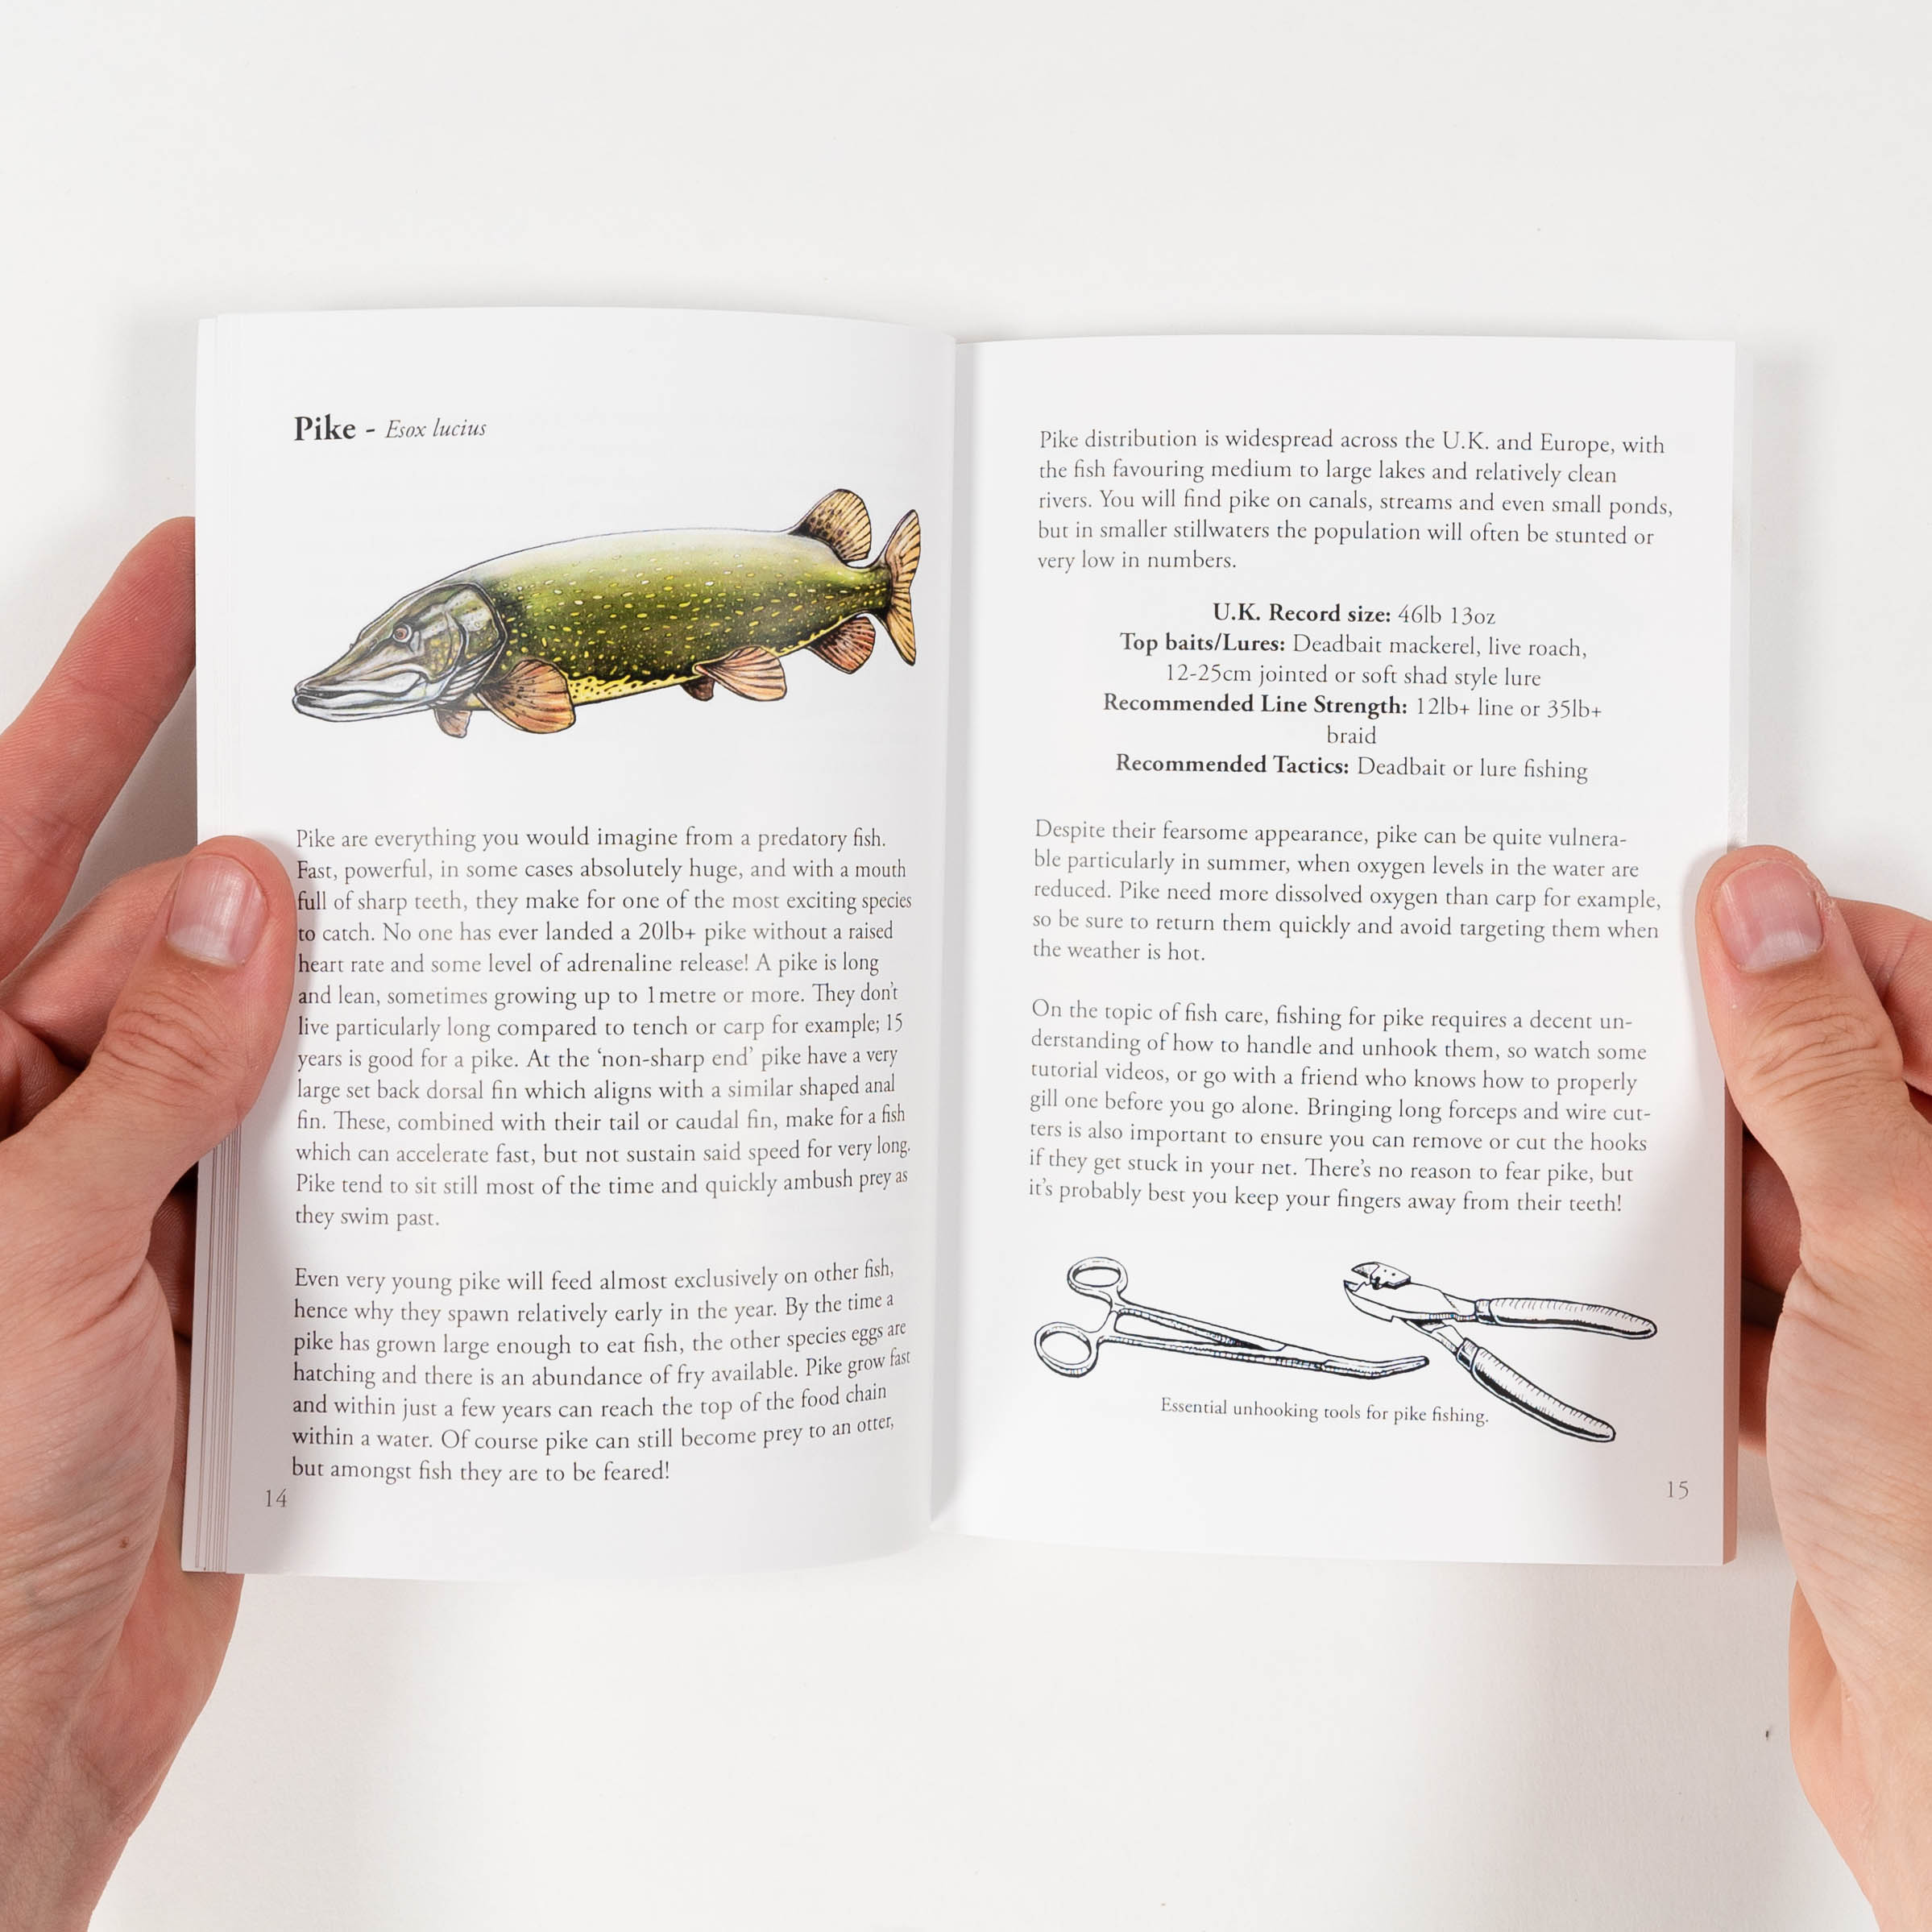 The Simple Fishing Guidebook